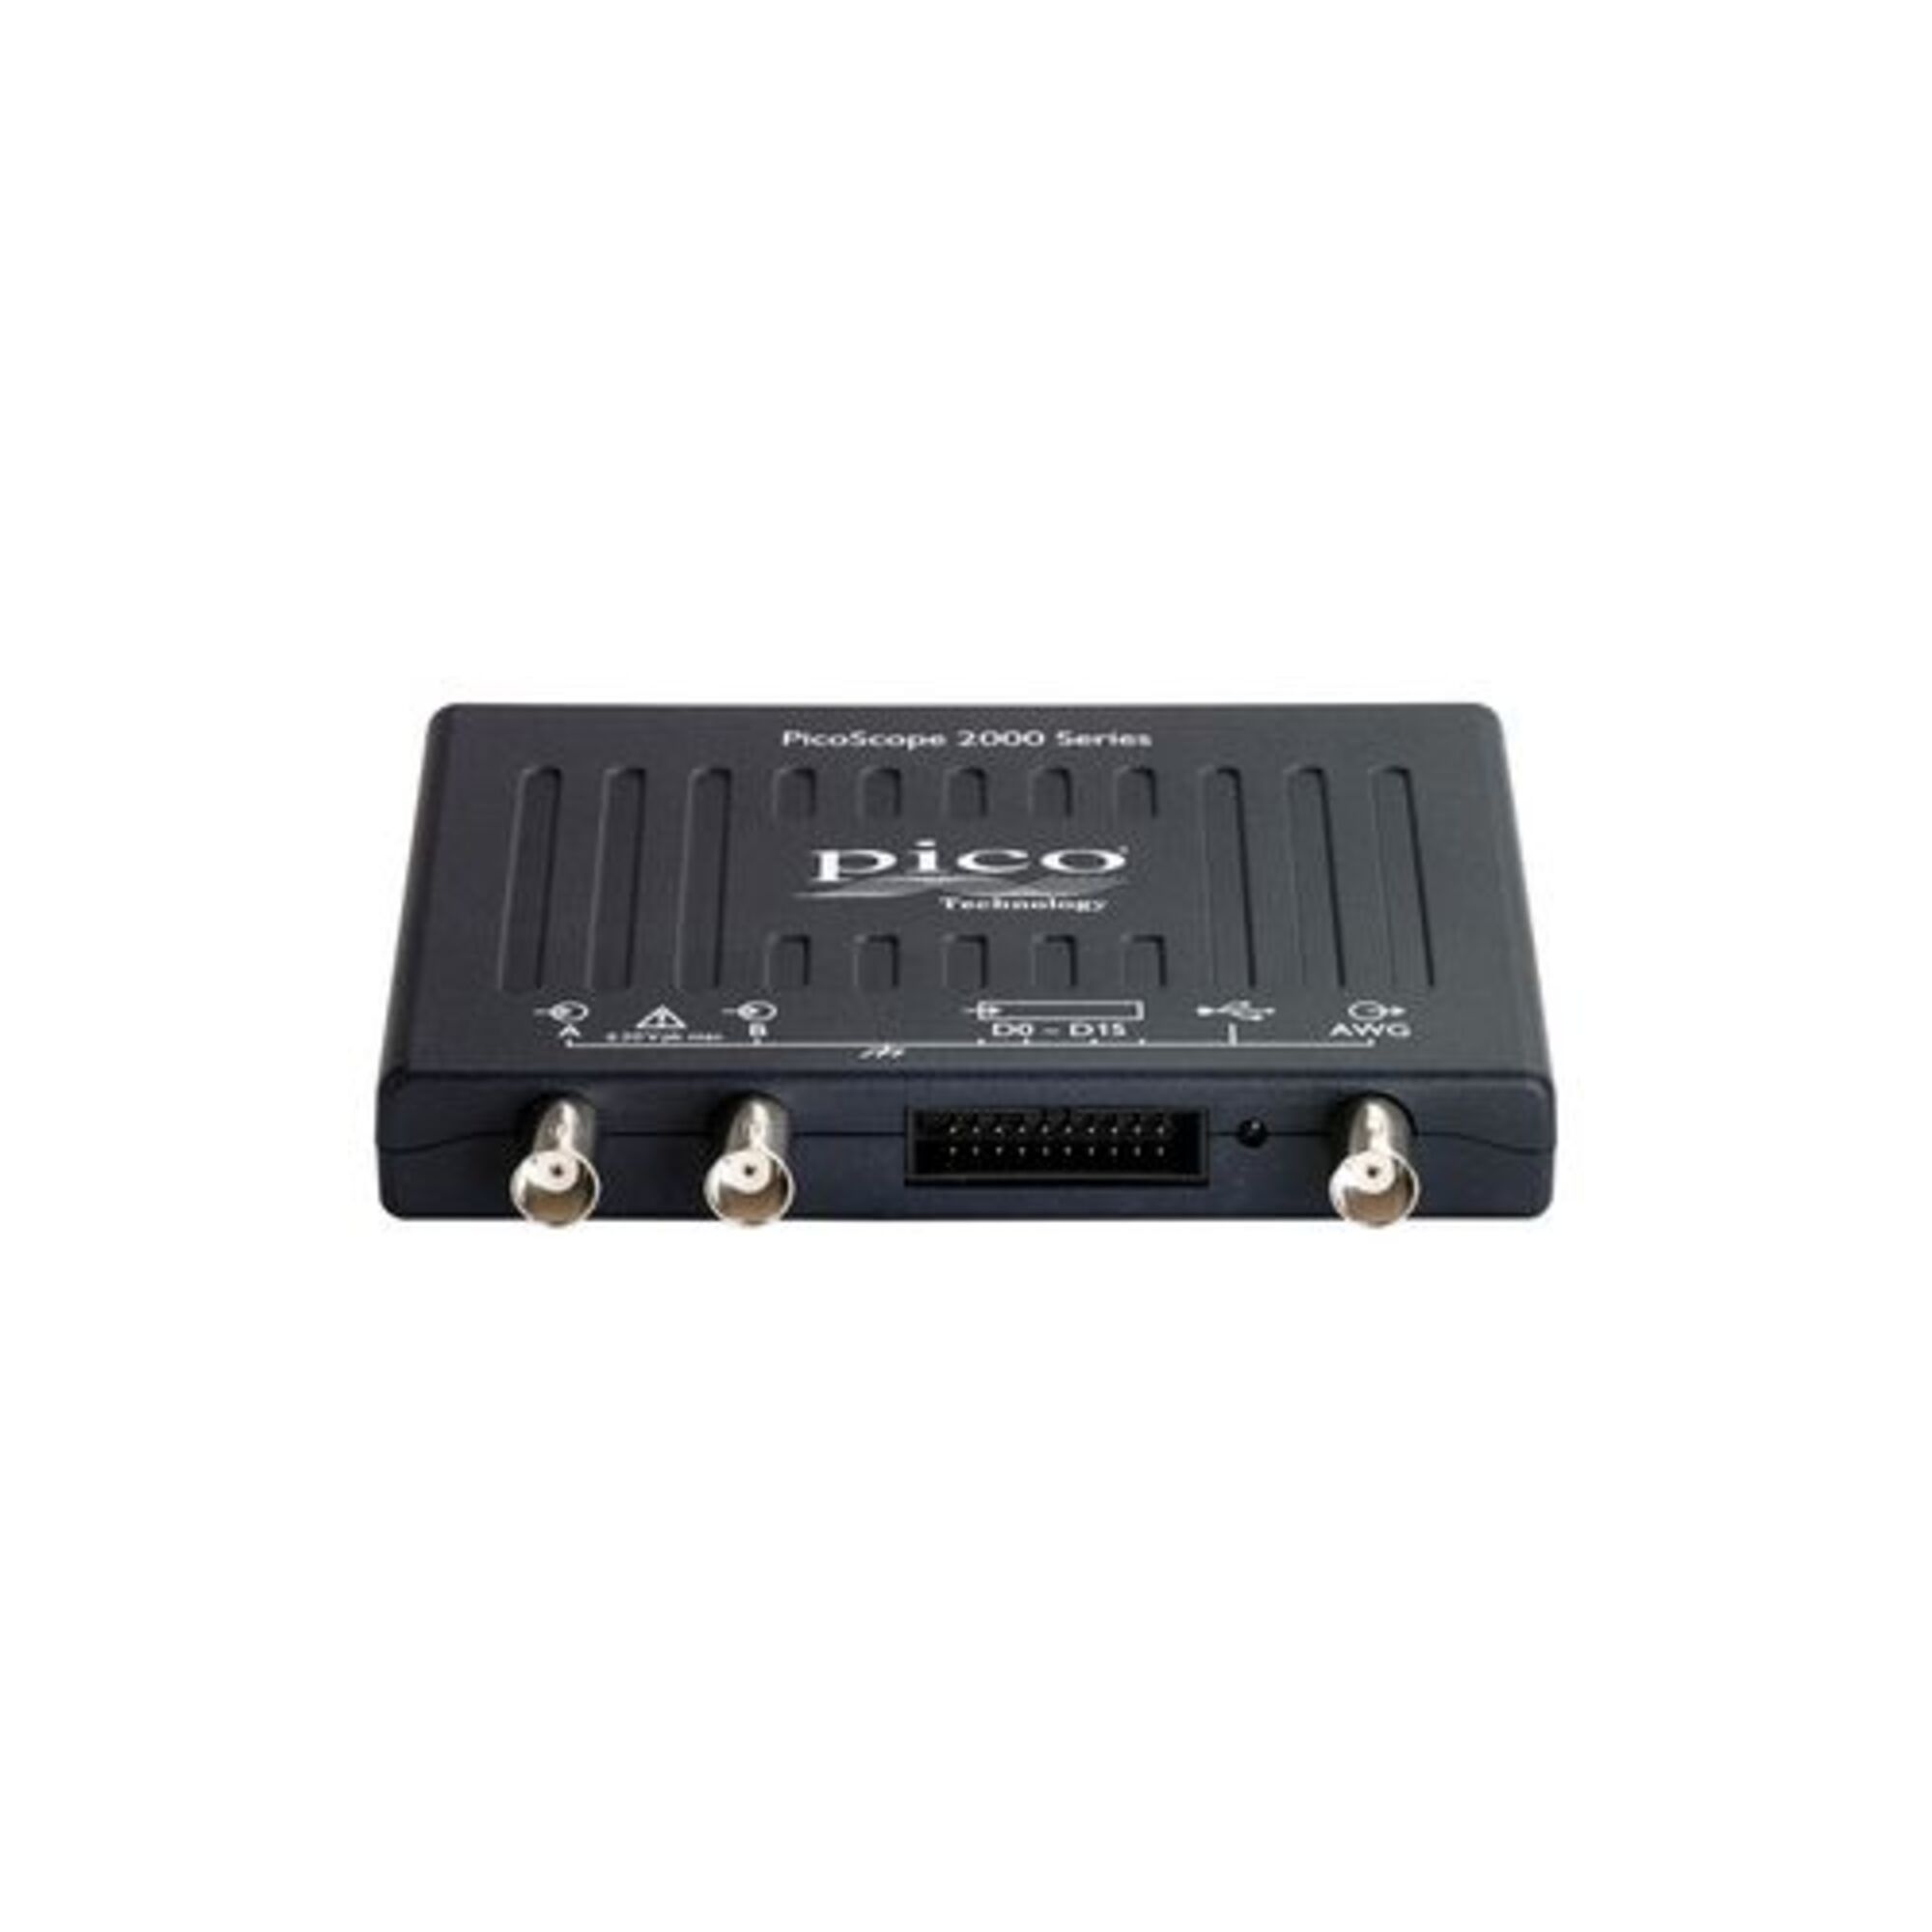 Pico Technology - PICOSCOPE 2206B MSO - PC USB Oscilloscope ...